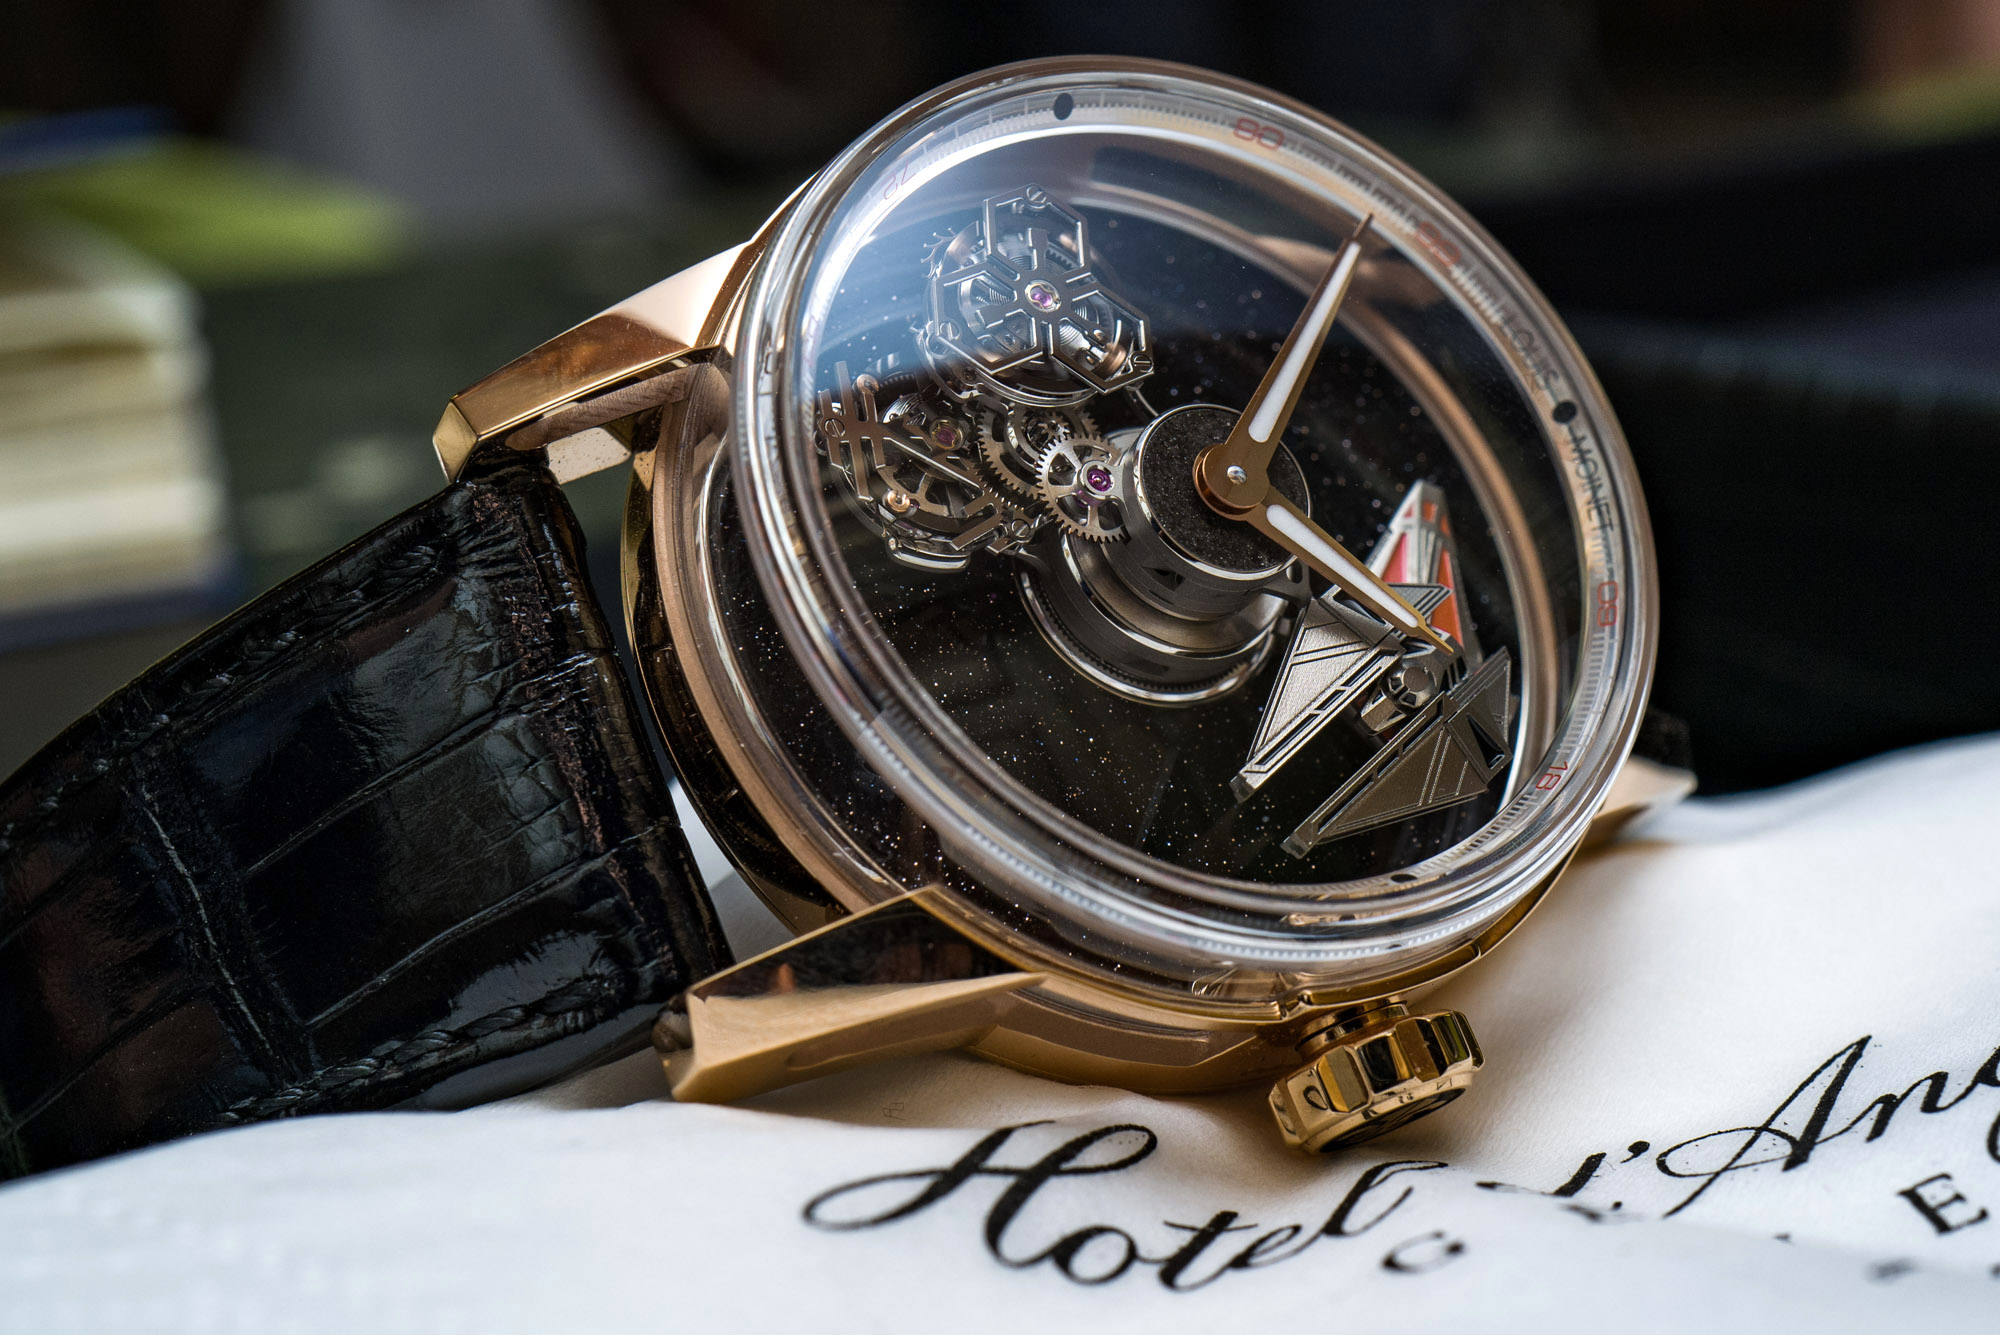 The Louis Moinet Moon Race Set of Tourbillon Watches (Live Pics & Price) -  Monochrome Watches